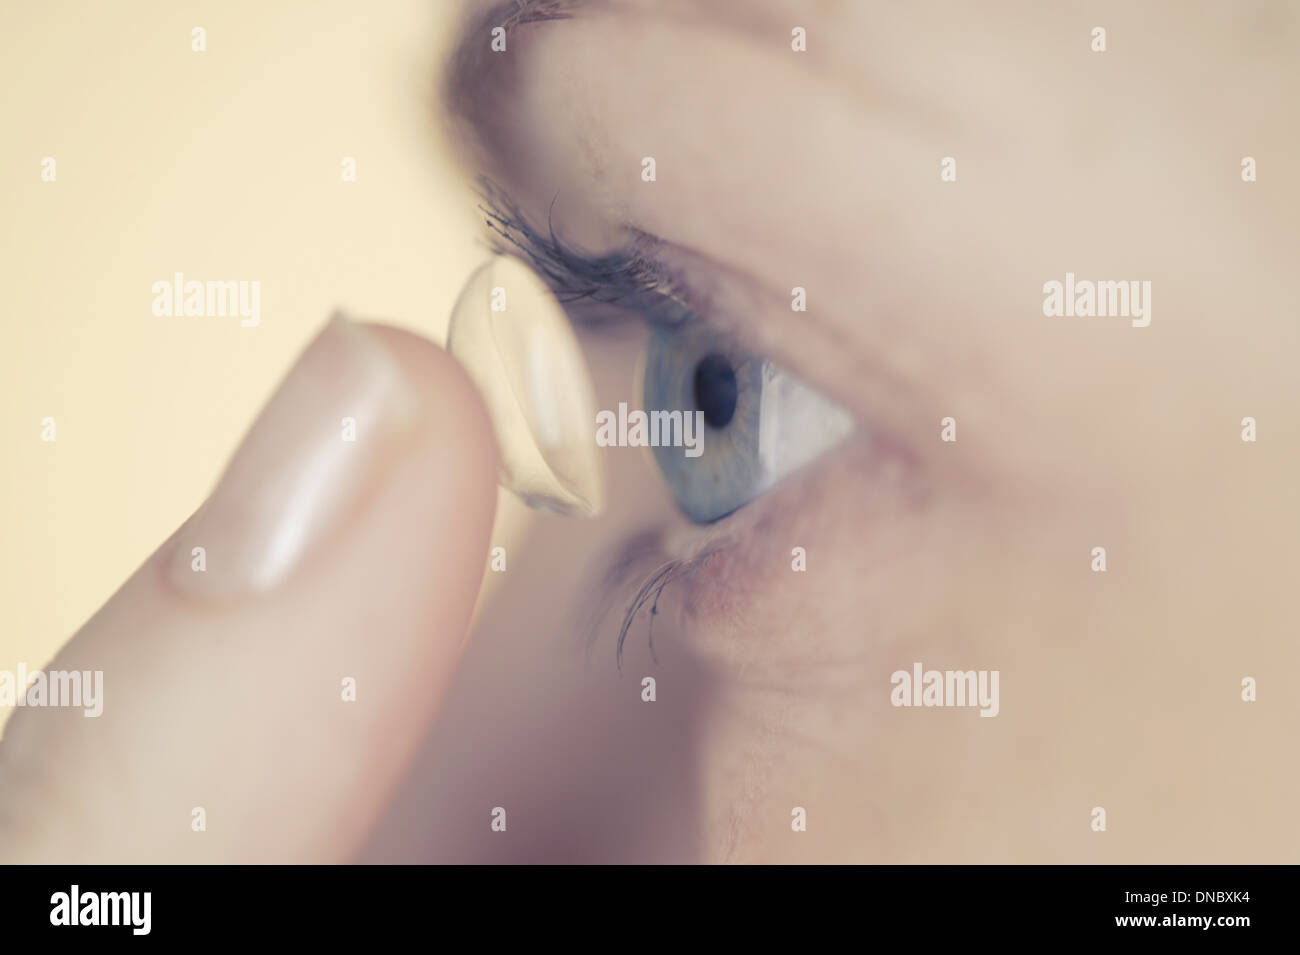 A woman applying a contact lens Stock Photo